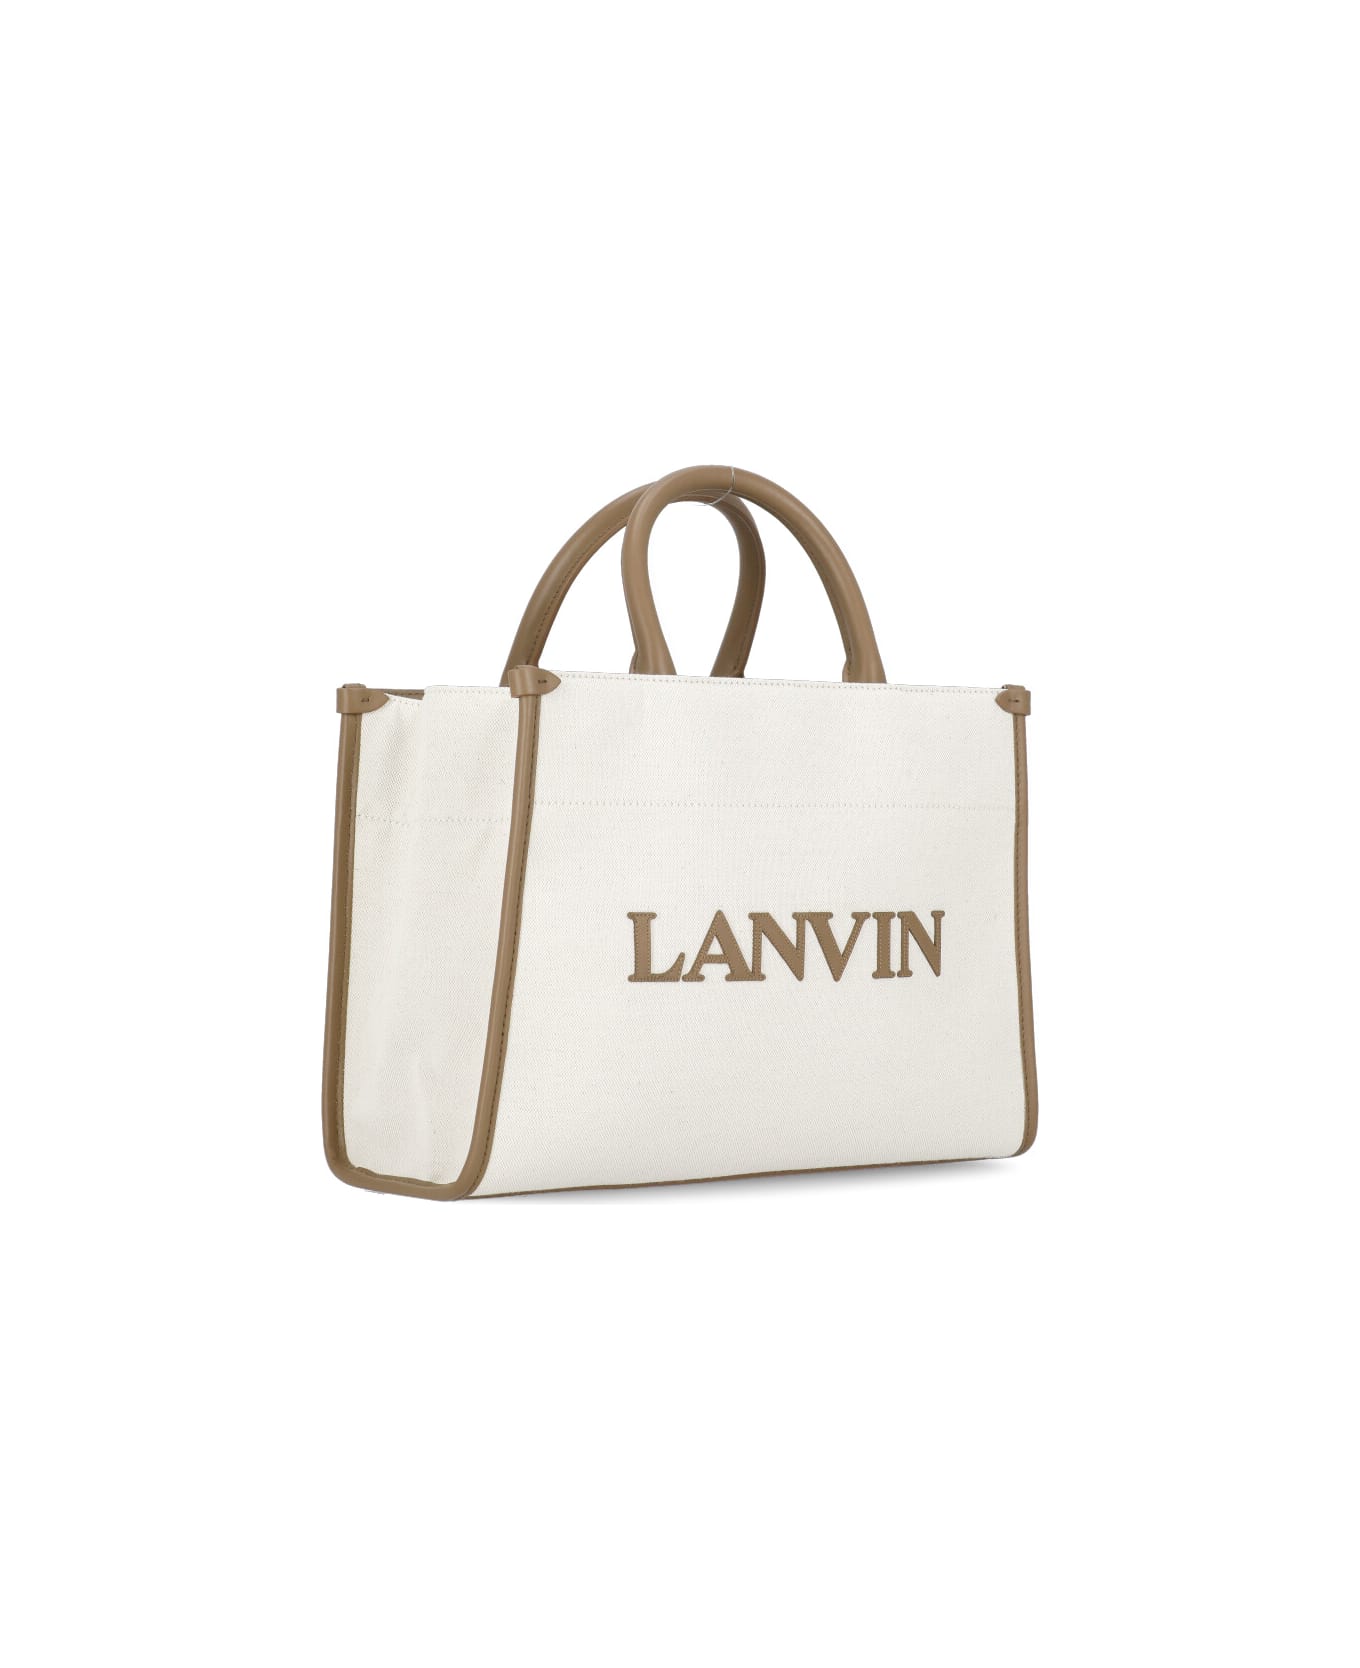 Lanvin Cotton And Linen Shopping Bag - Beige トートバッグ